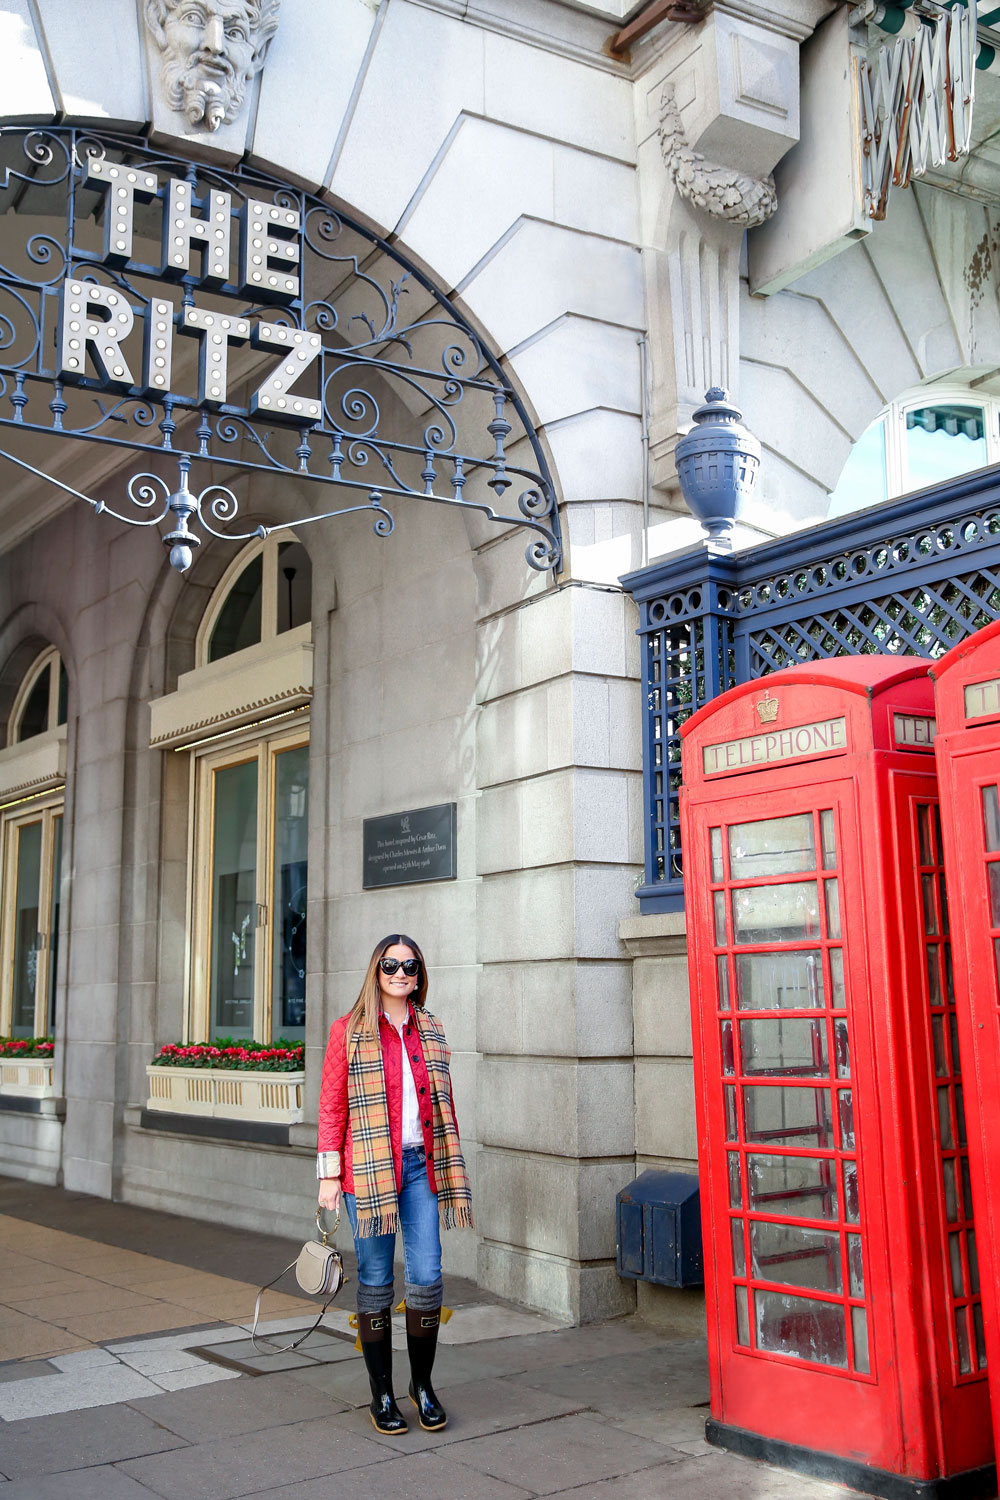 Ritz London Red Phone Box